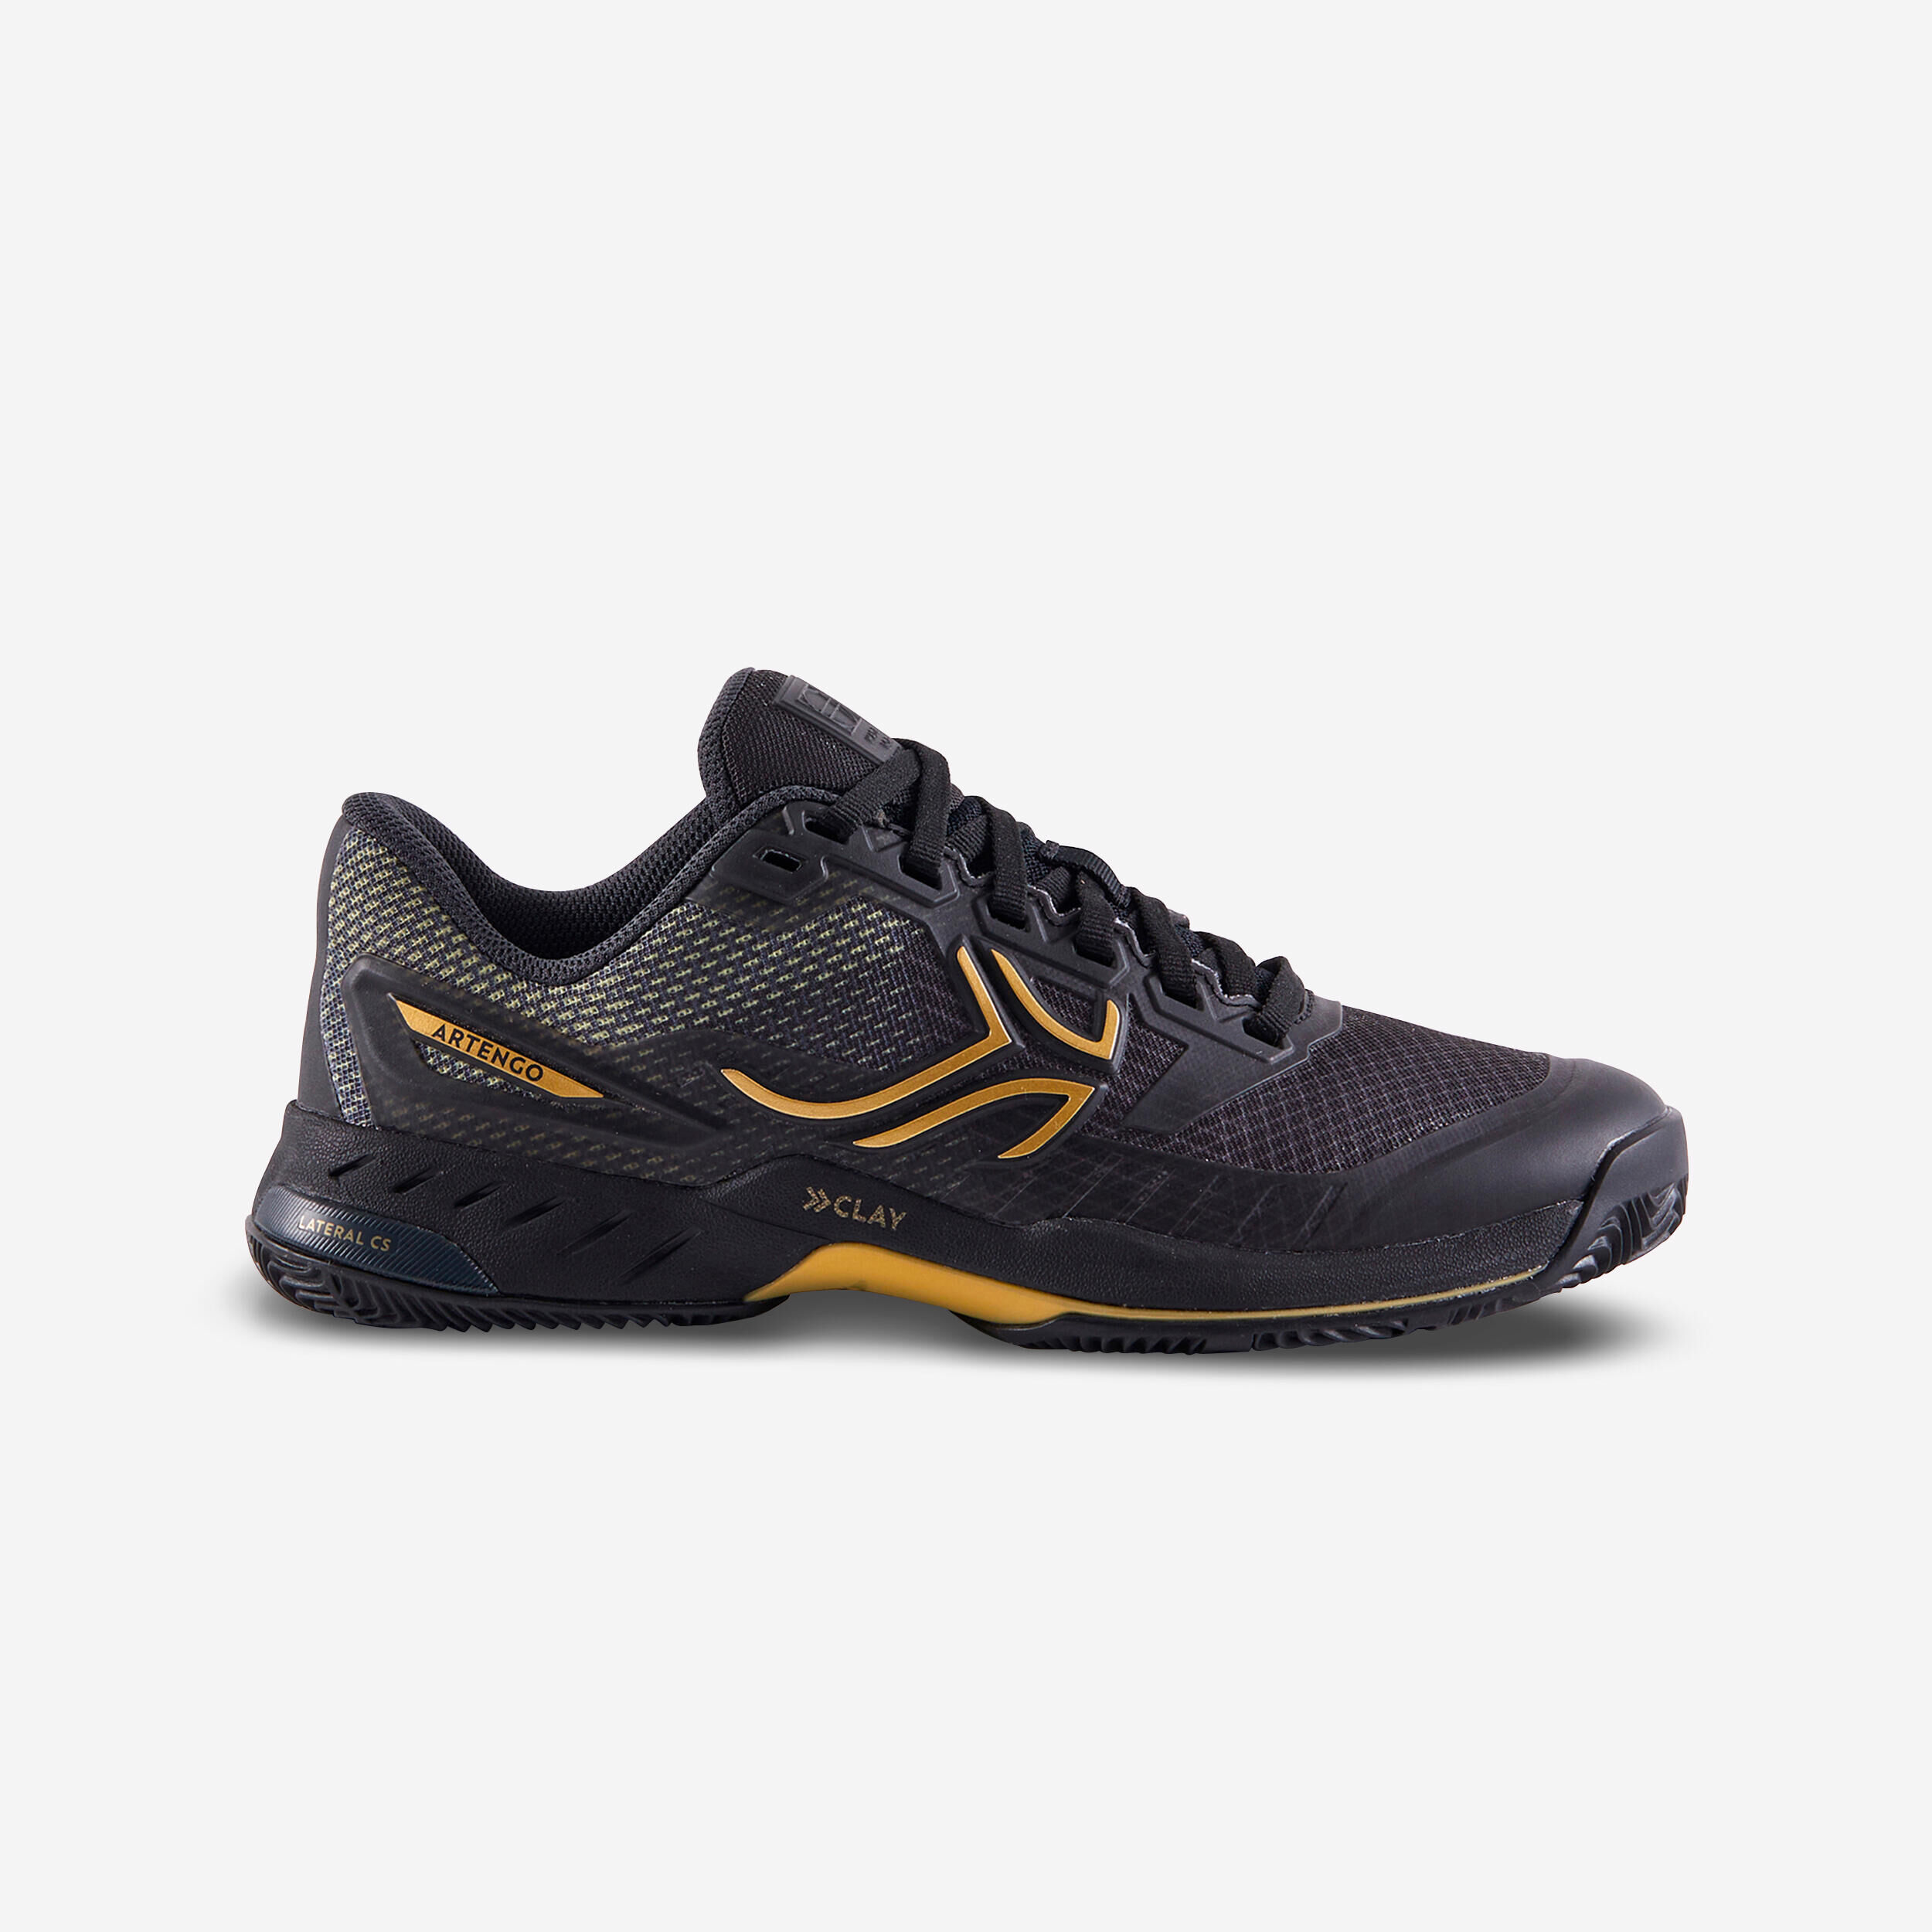 ARTENGO Women's Clay Court Tennis Shoes TS990 - Black